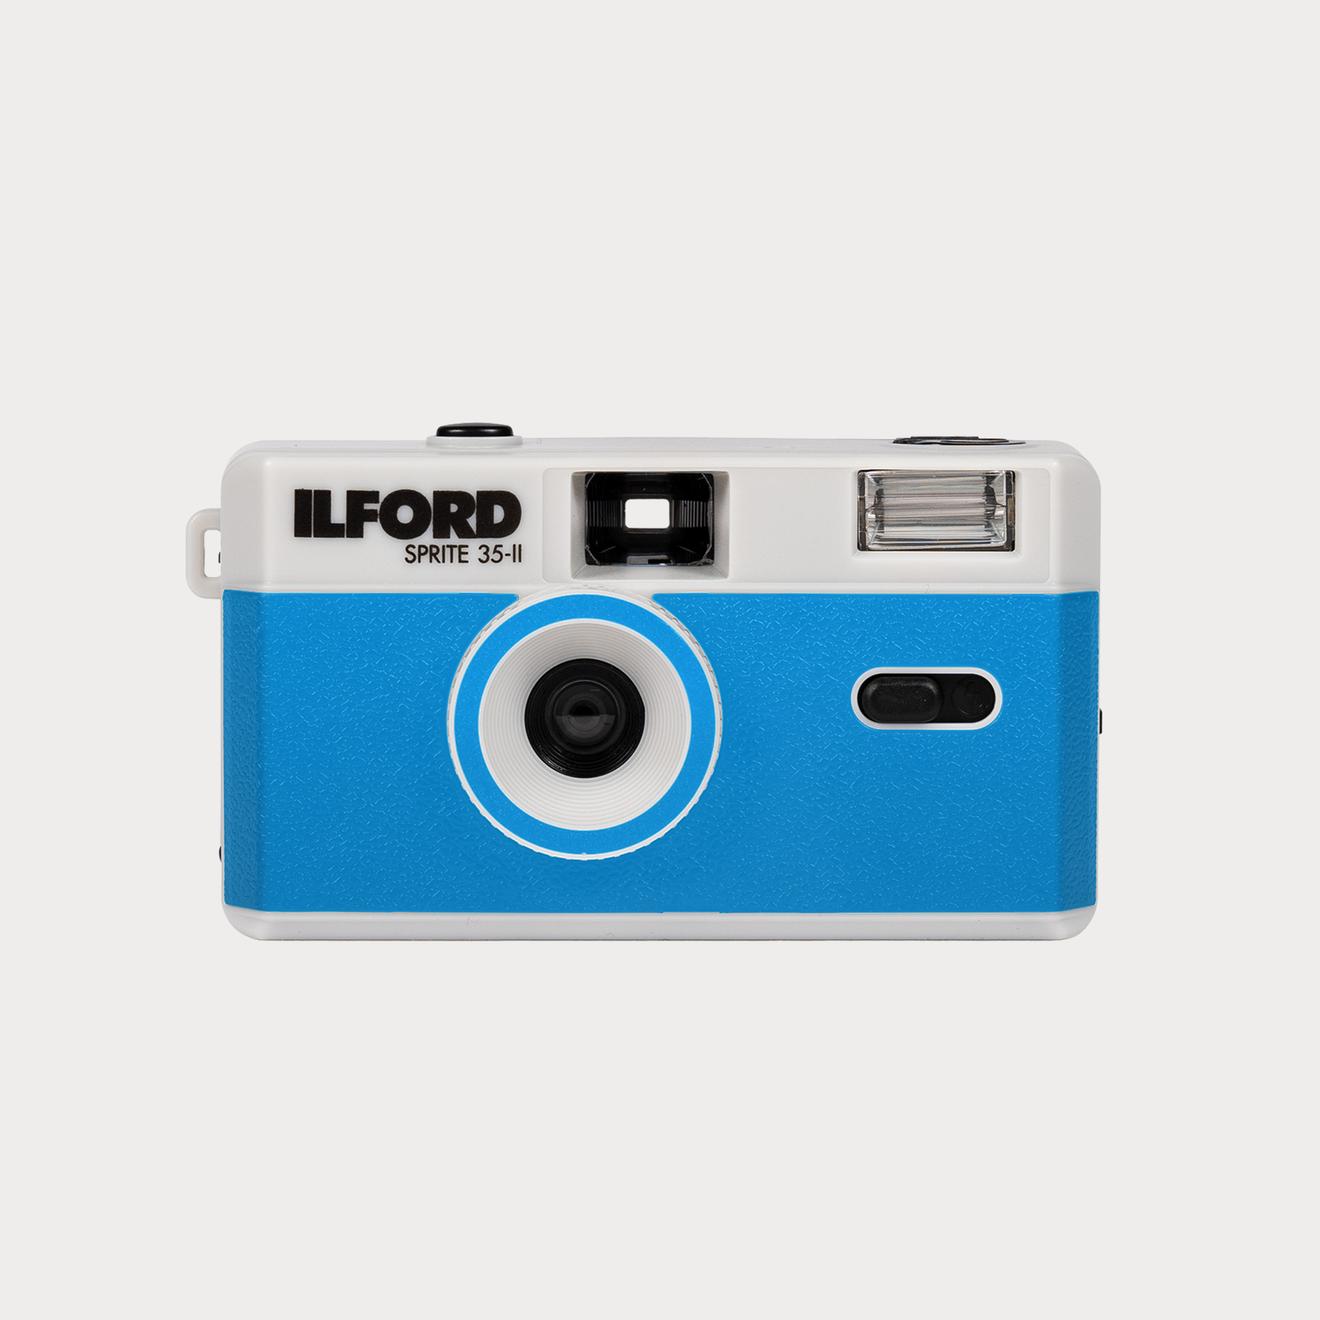 shopmoment.com | Ilford Sprite 35-II Reusable 35mm Film Camera